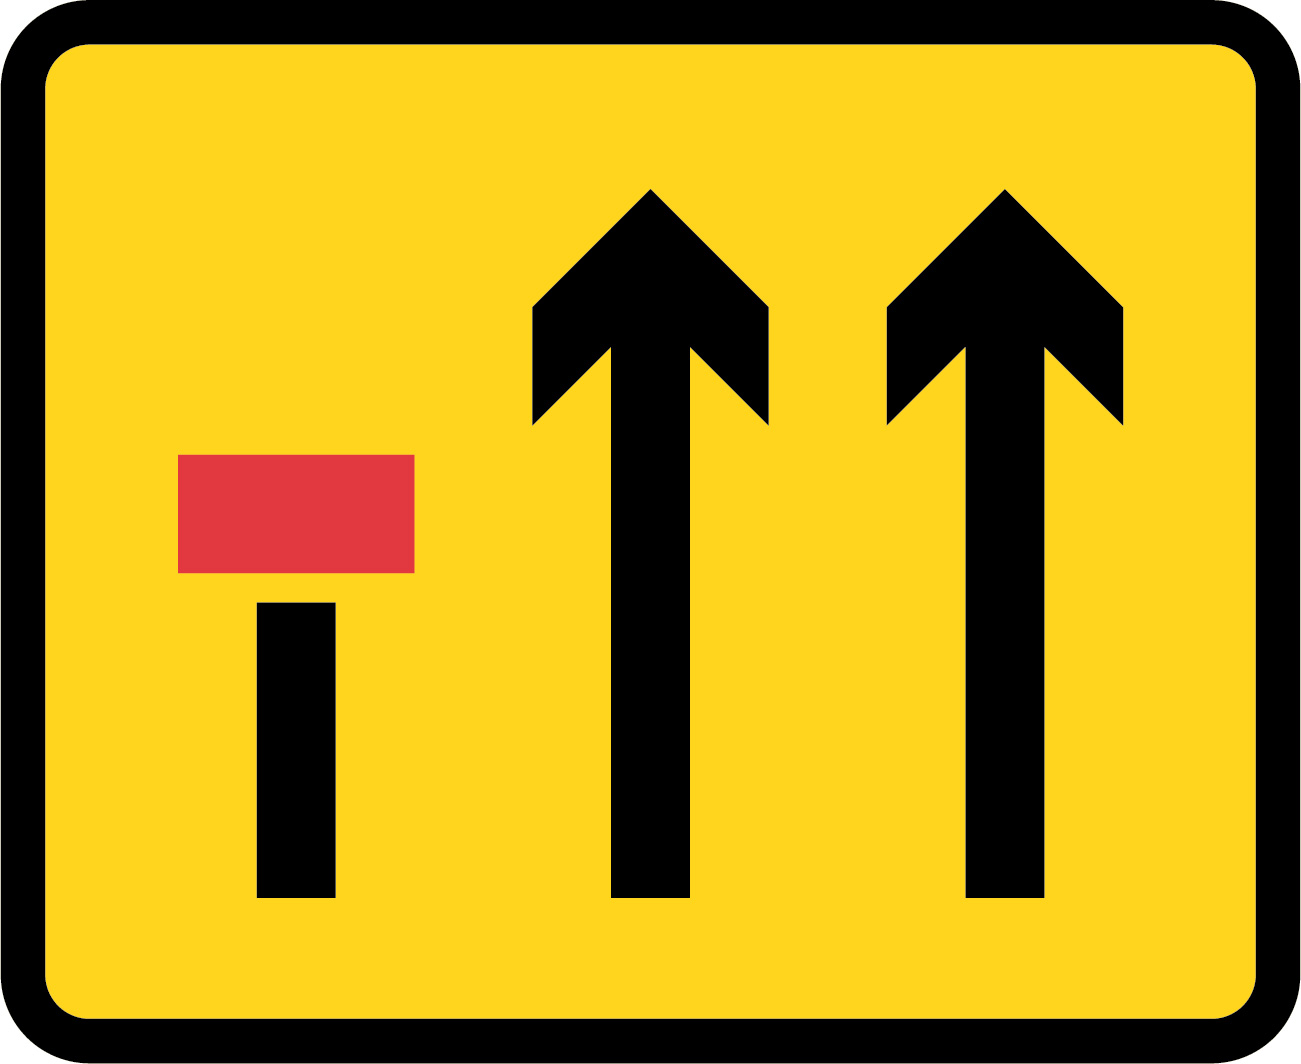 Left lane closed sign